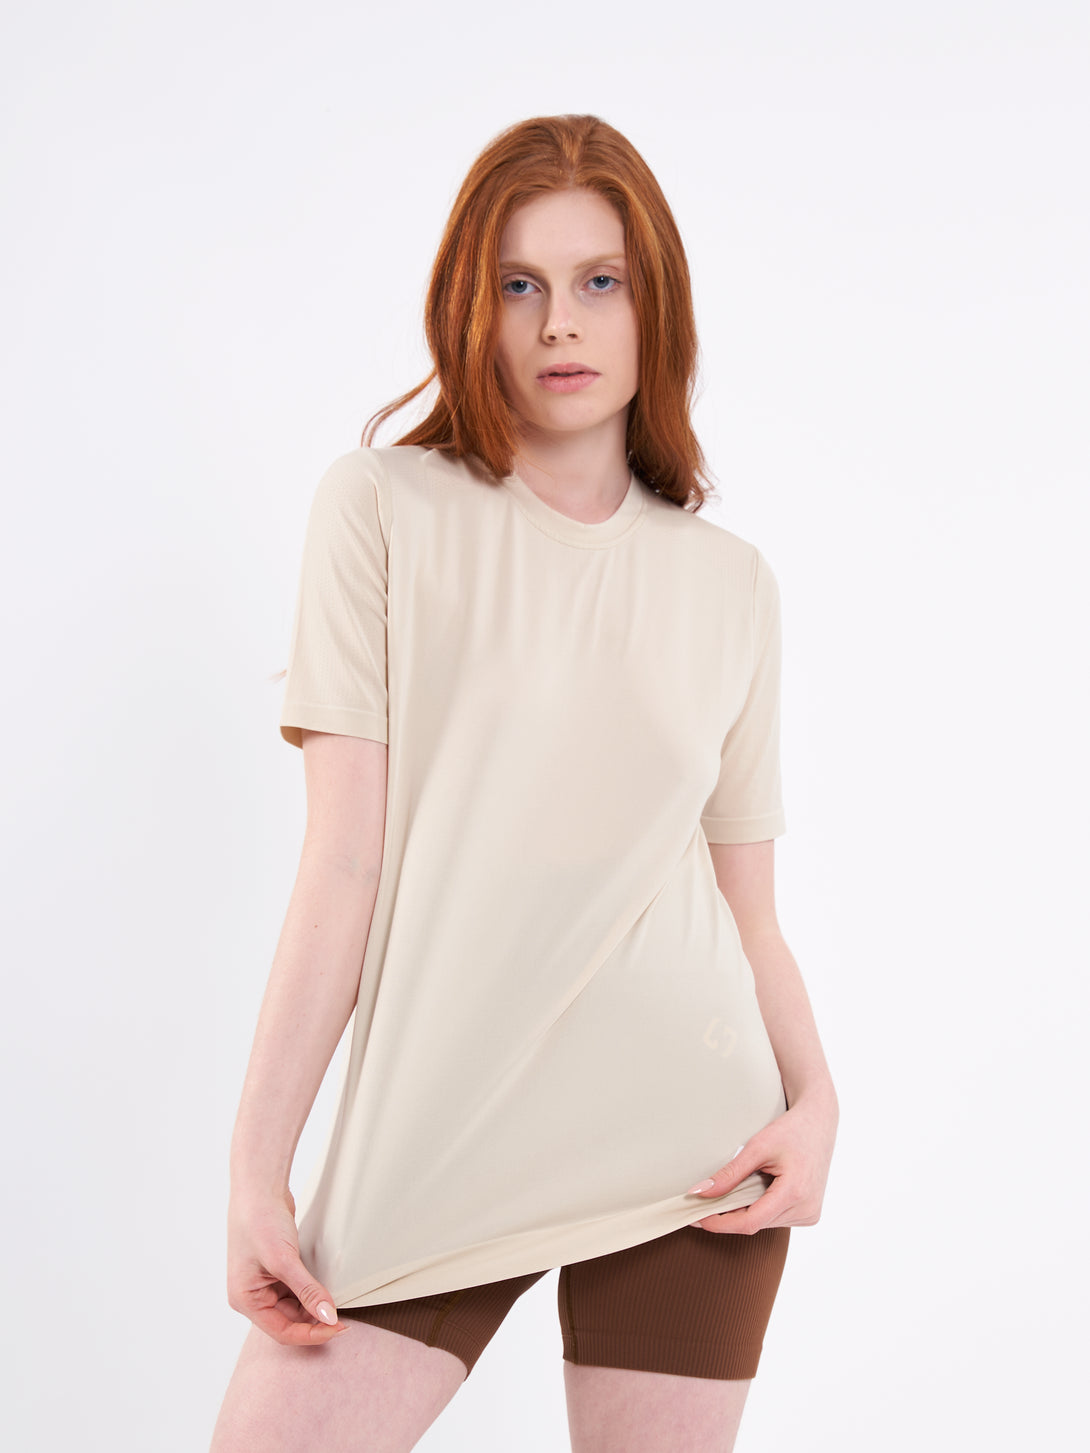 A Woman Wearing White Sand Color Unisex Seamless Melange T-Shirt. Enhanced Comfort